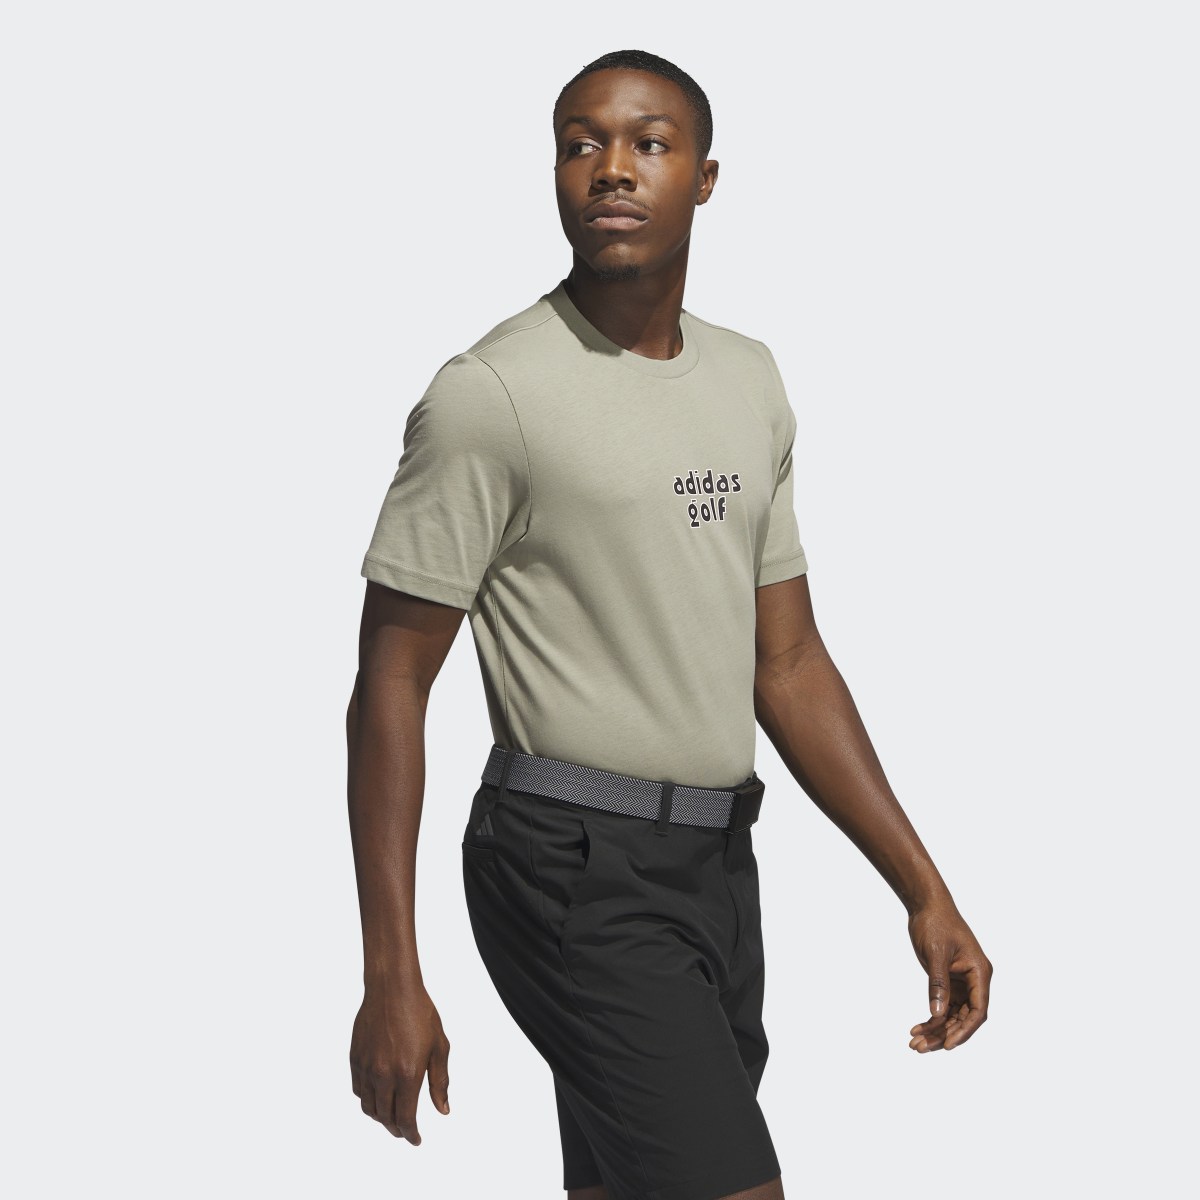 Adidas Golf Graphic T-Shirt. 5